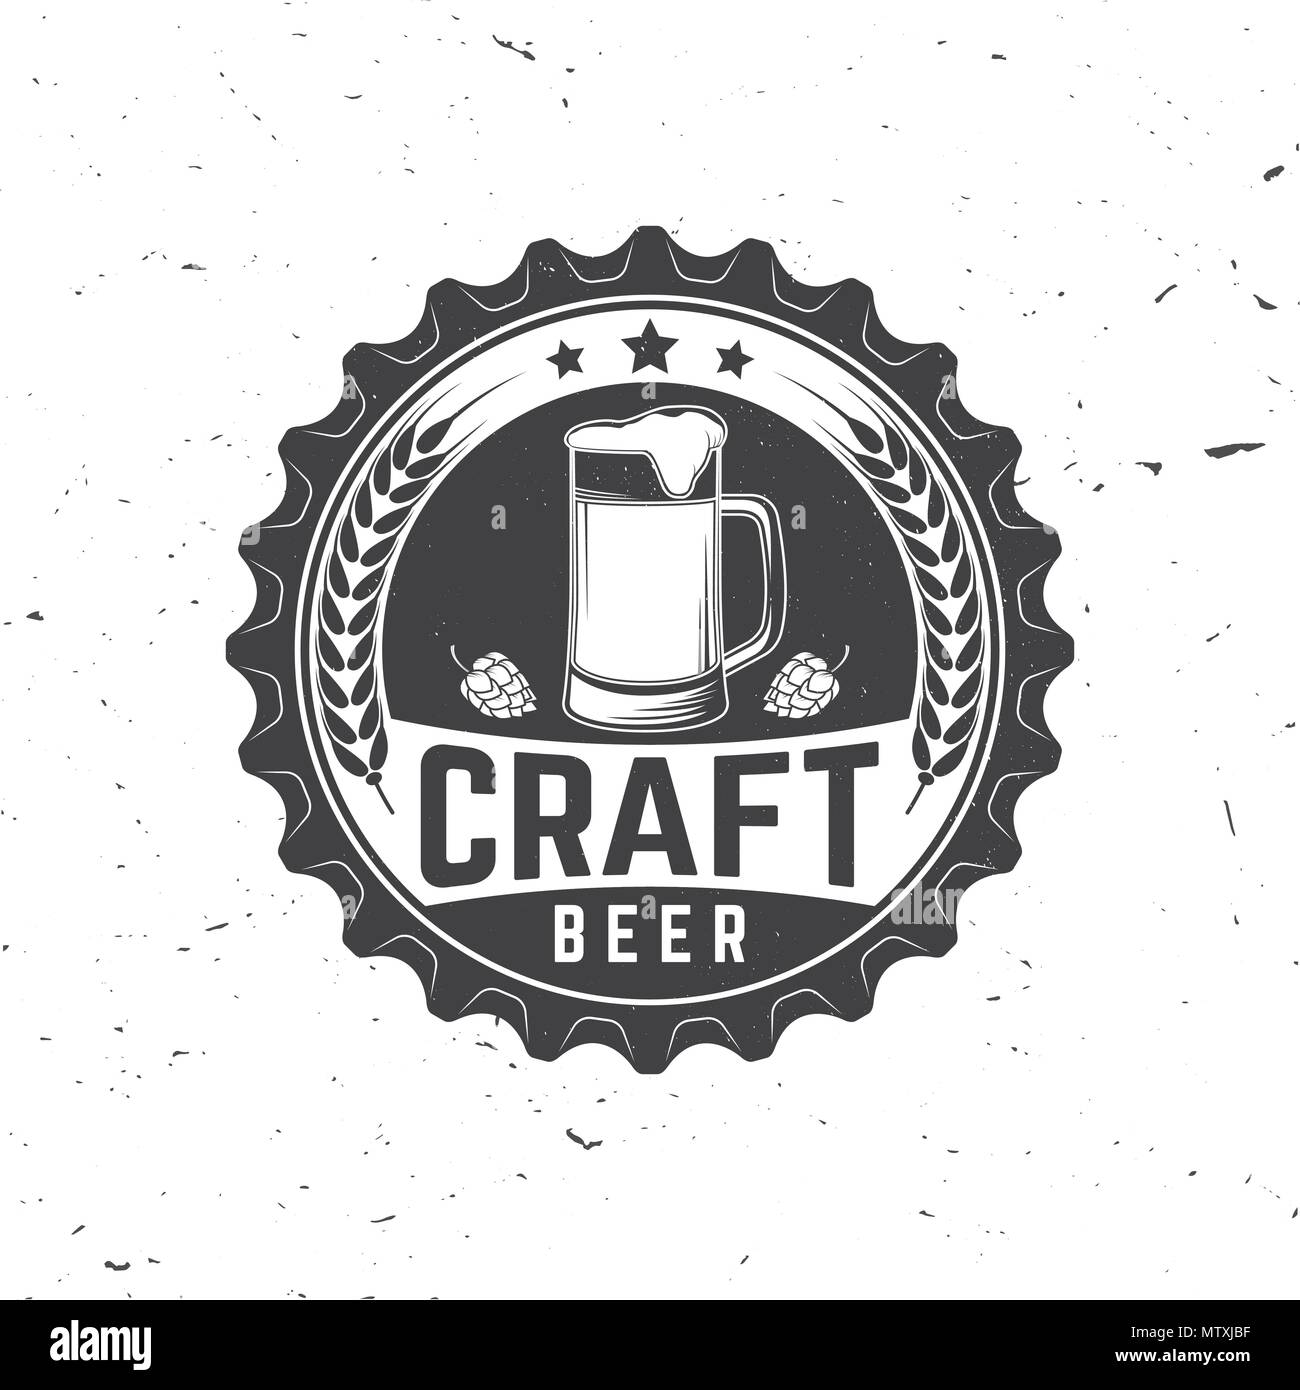 Craft Beer badge. Vector illustration. Vintage design for bar, pub and restaurant business. Coaster for beeror beer bottle cap. Typography design for  Stock Vector